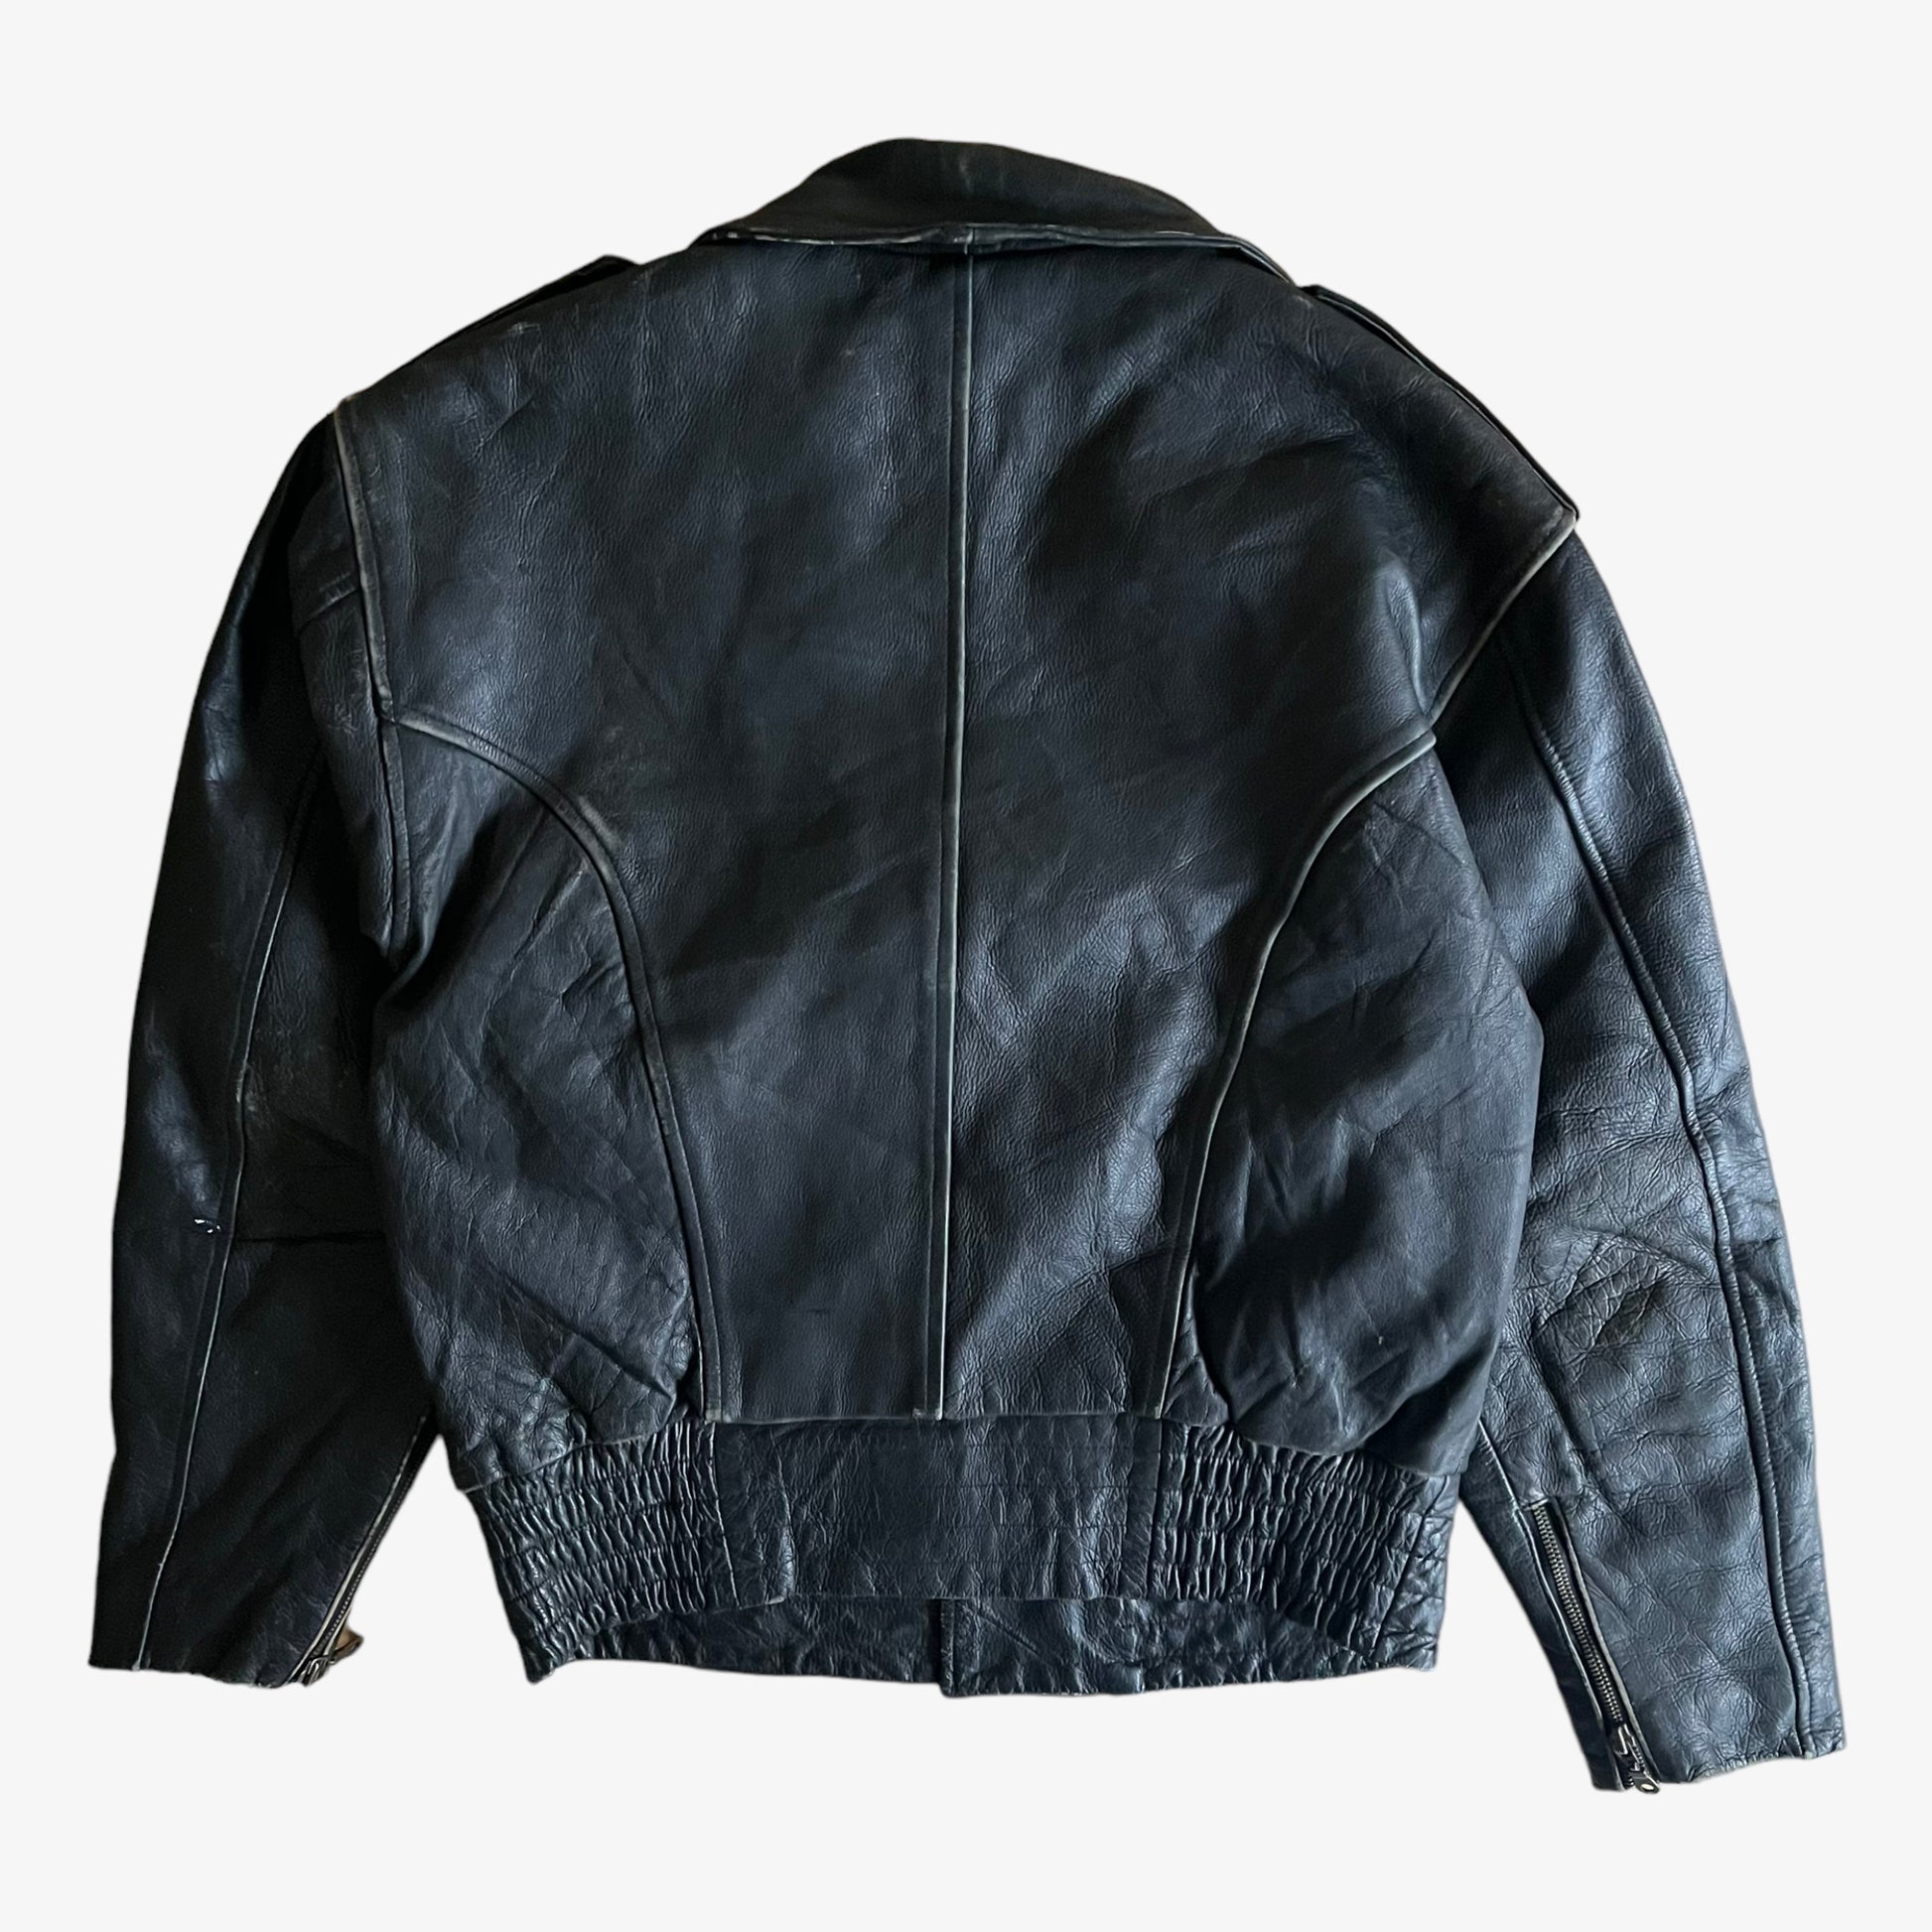 Vintage 90s Leather Biker Jacket With Embroidered Eagle Back - Casspios Dream